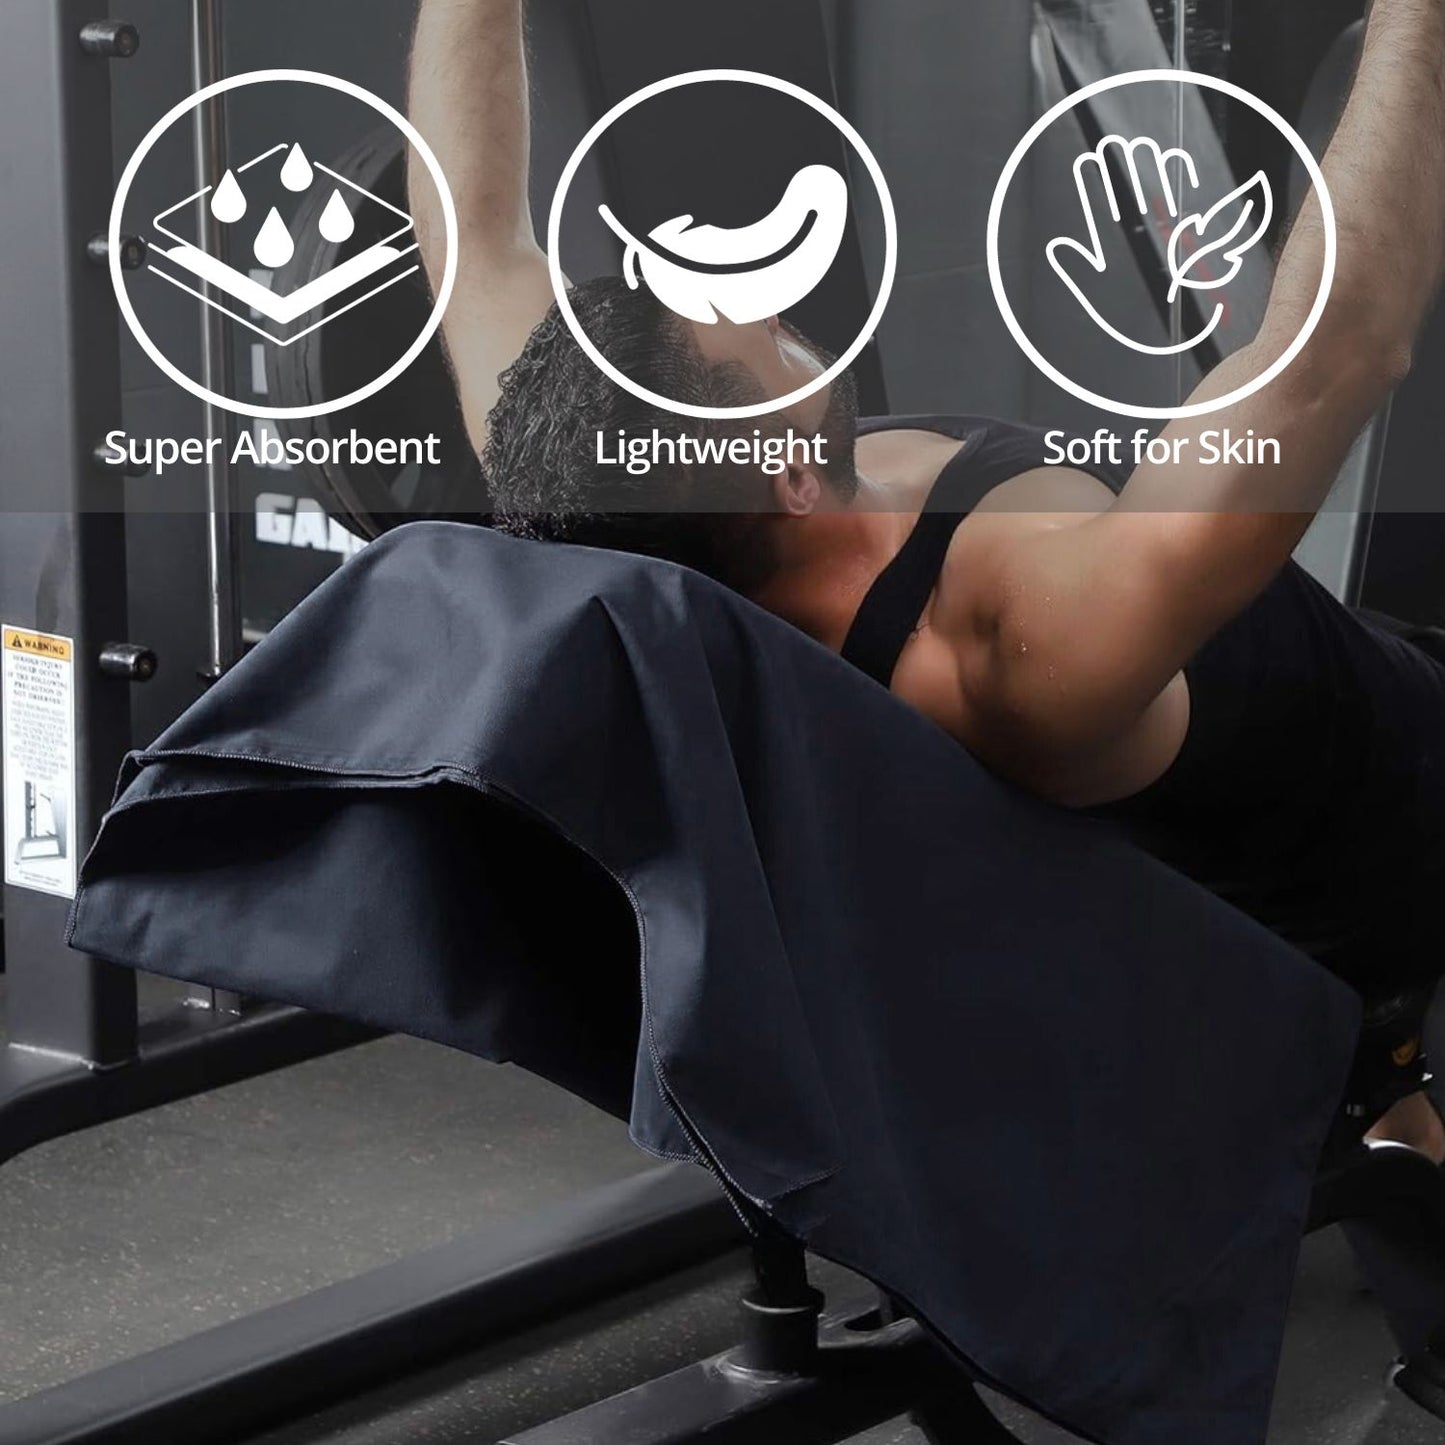 VERPEAK Quick Dry Gym Sport Towel 110*175CM (Black) VP-QDT-105-JLJD